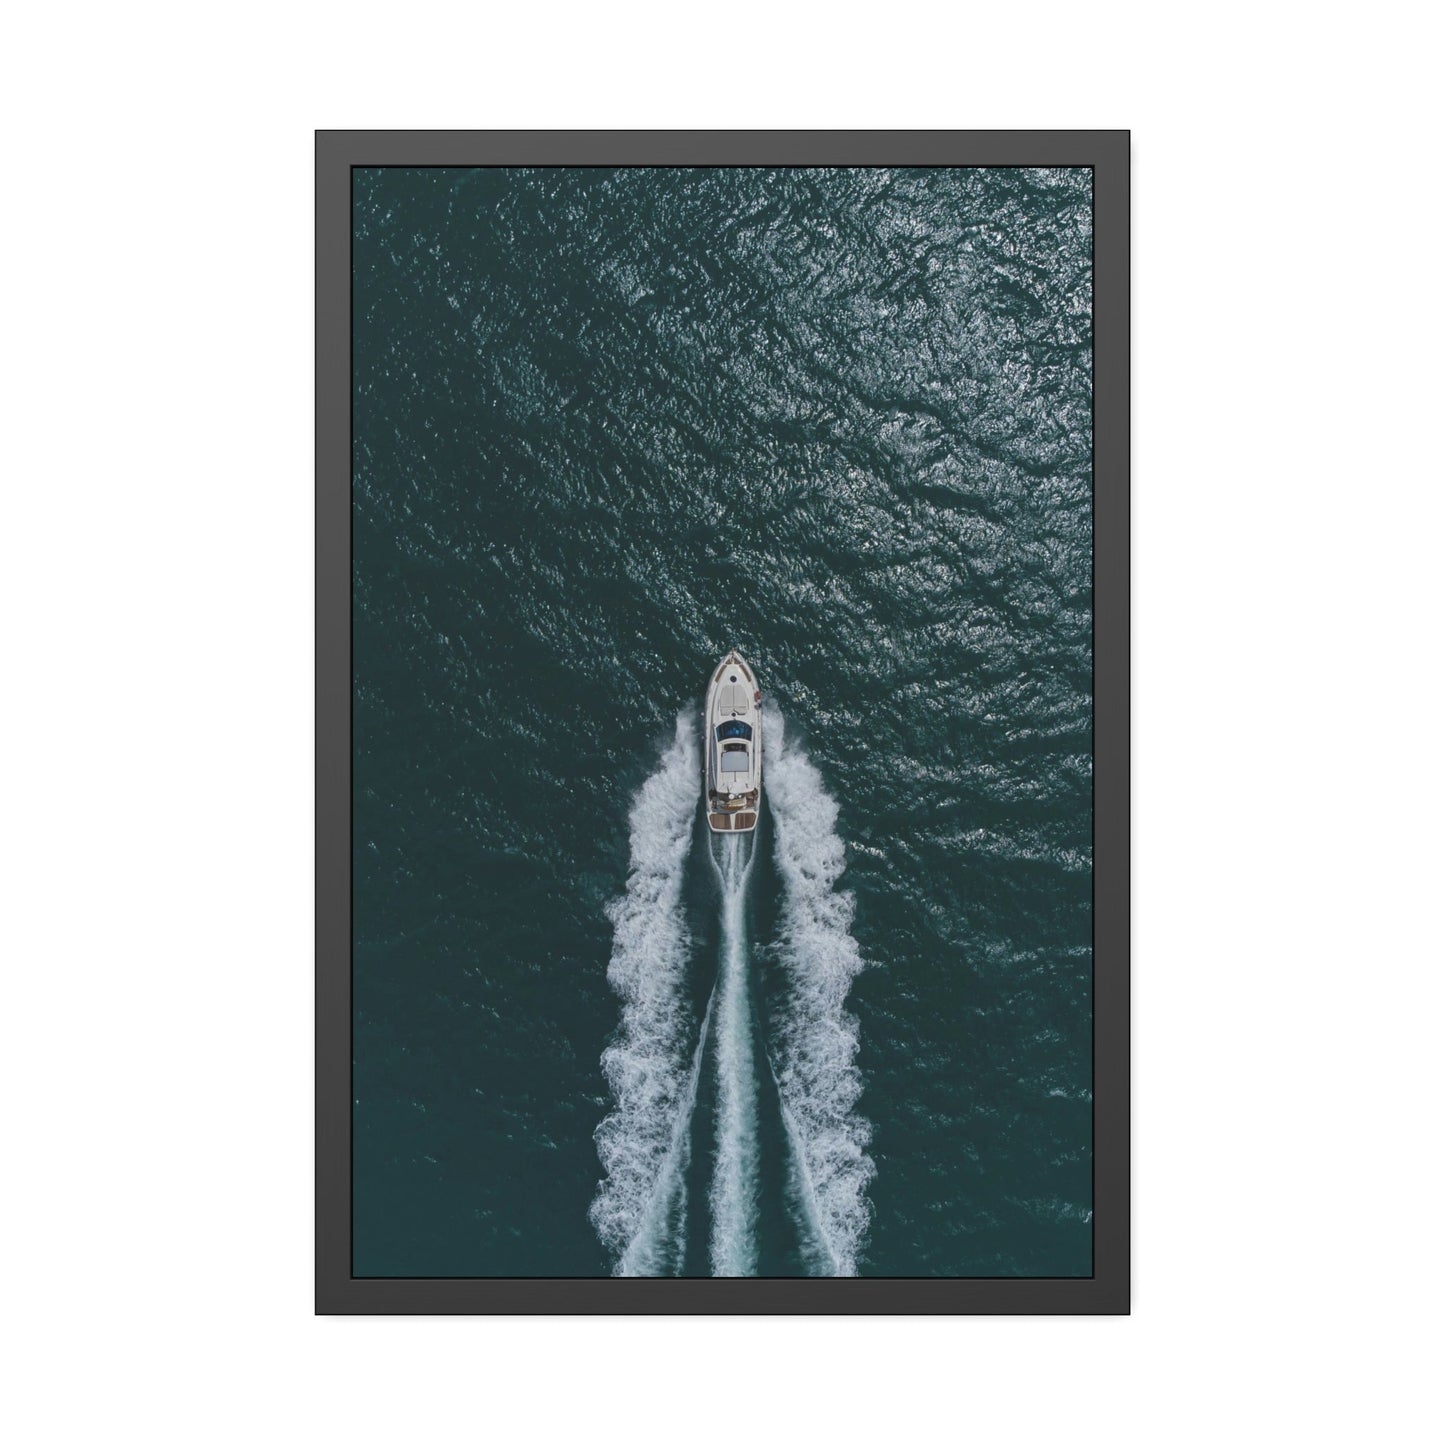 Modern Boat Art: Contemporary Print on Canvas